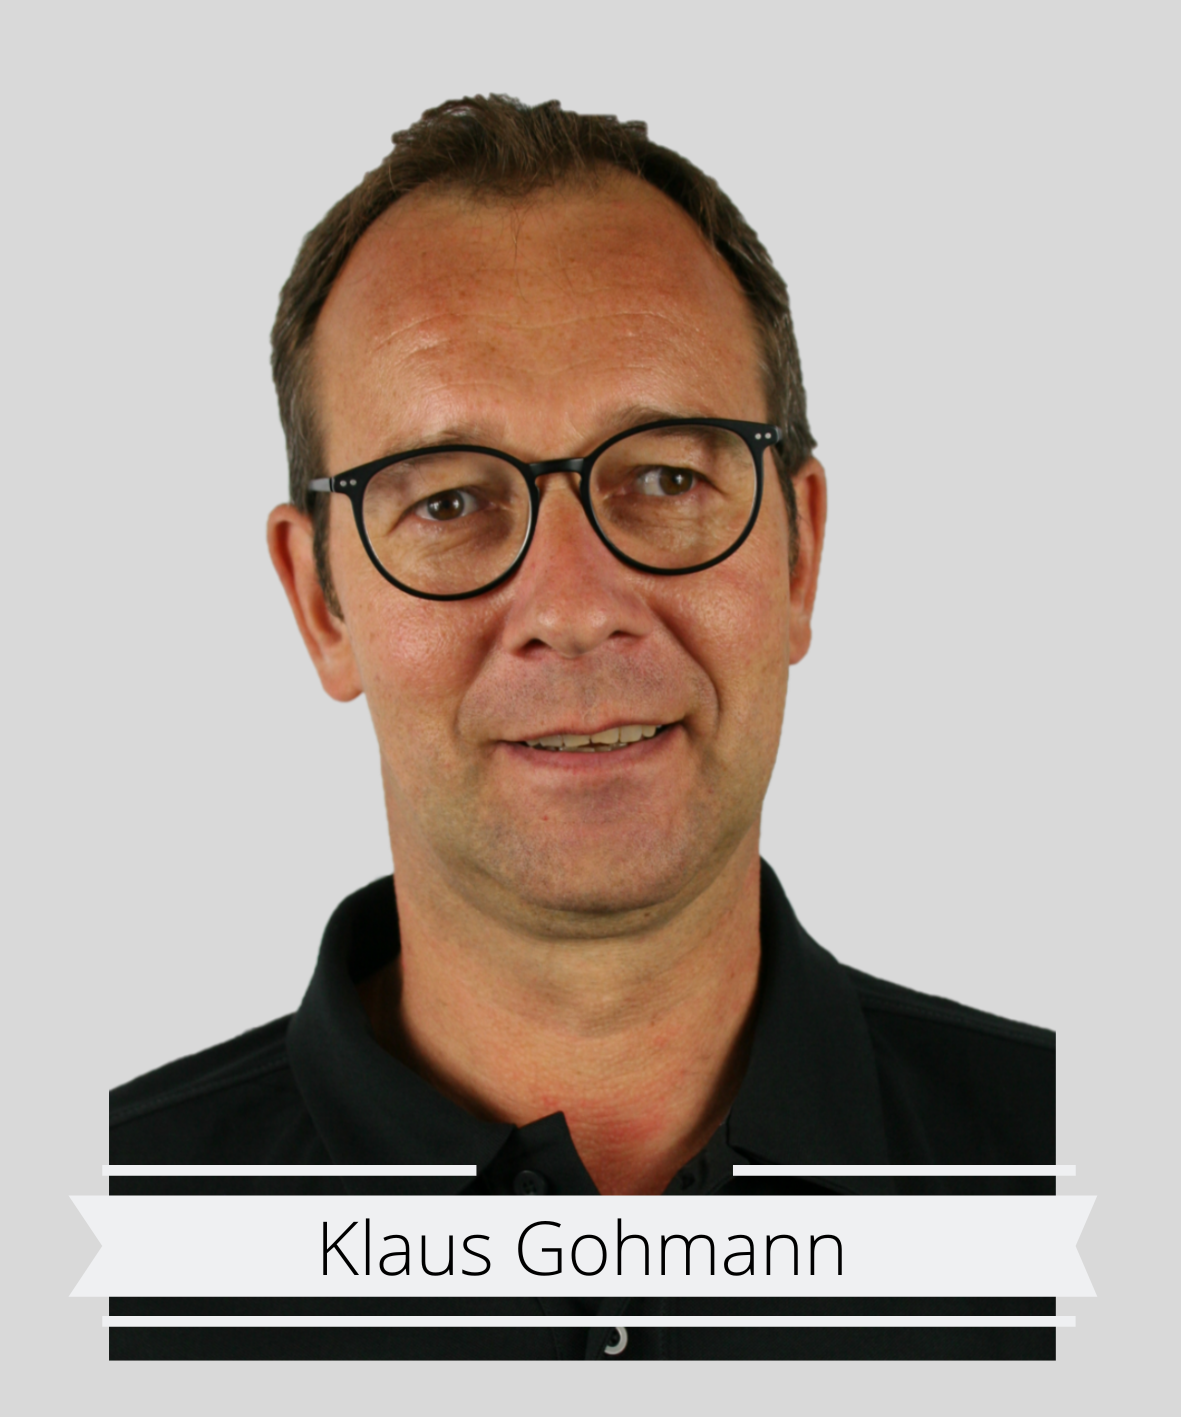 Klaus Gohmann